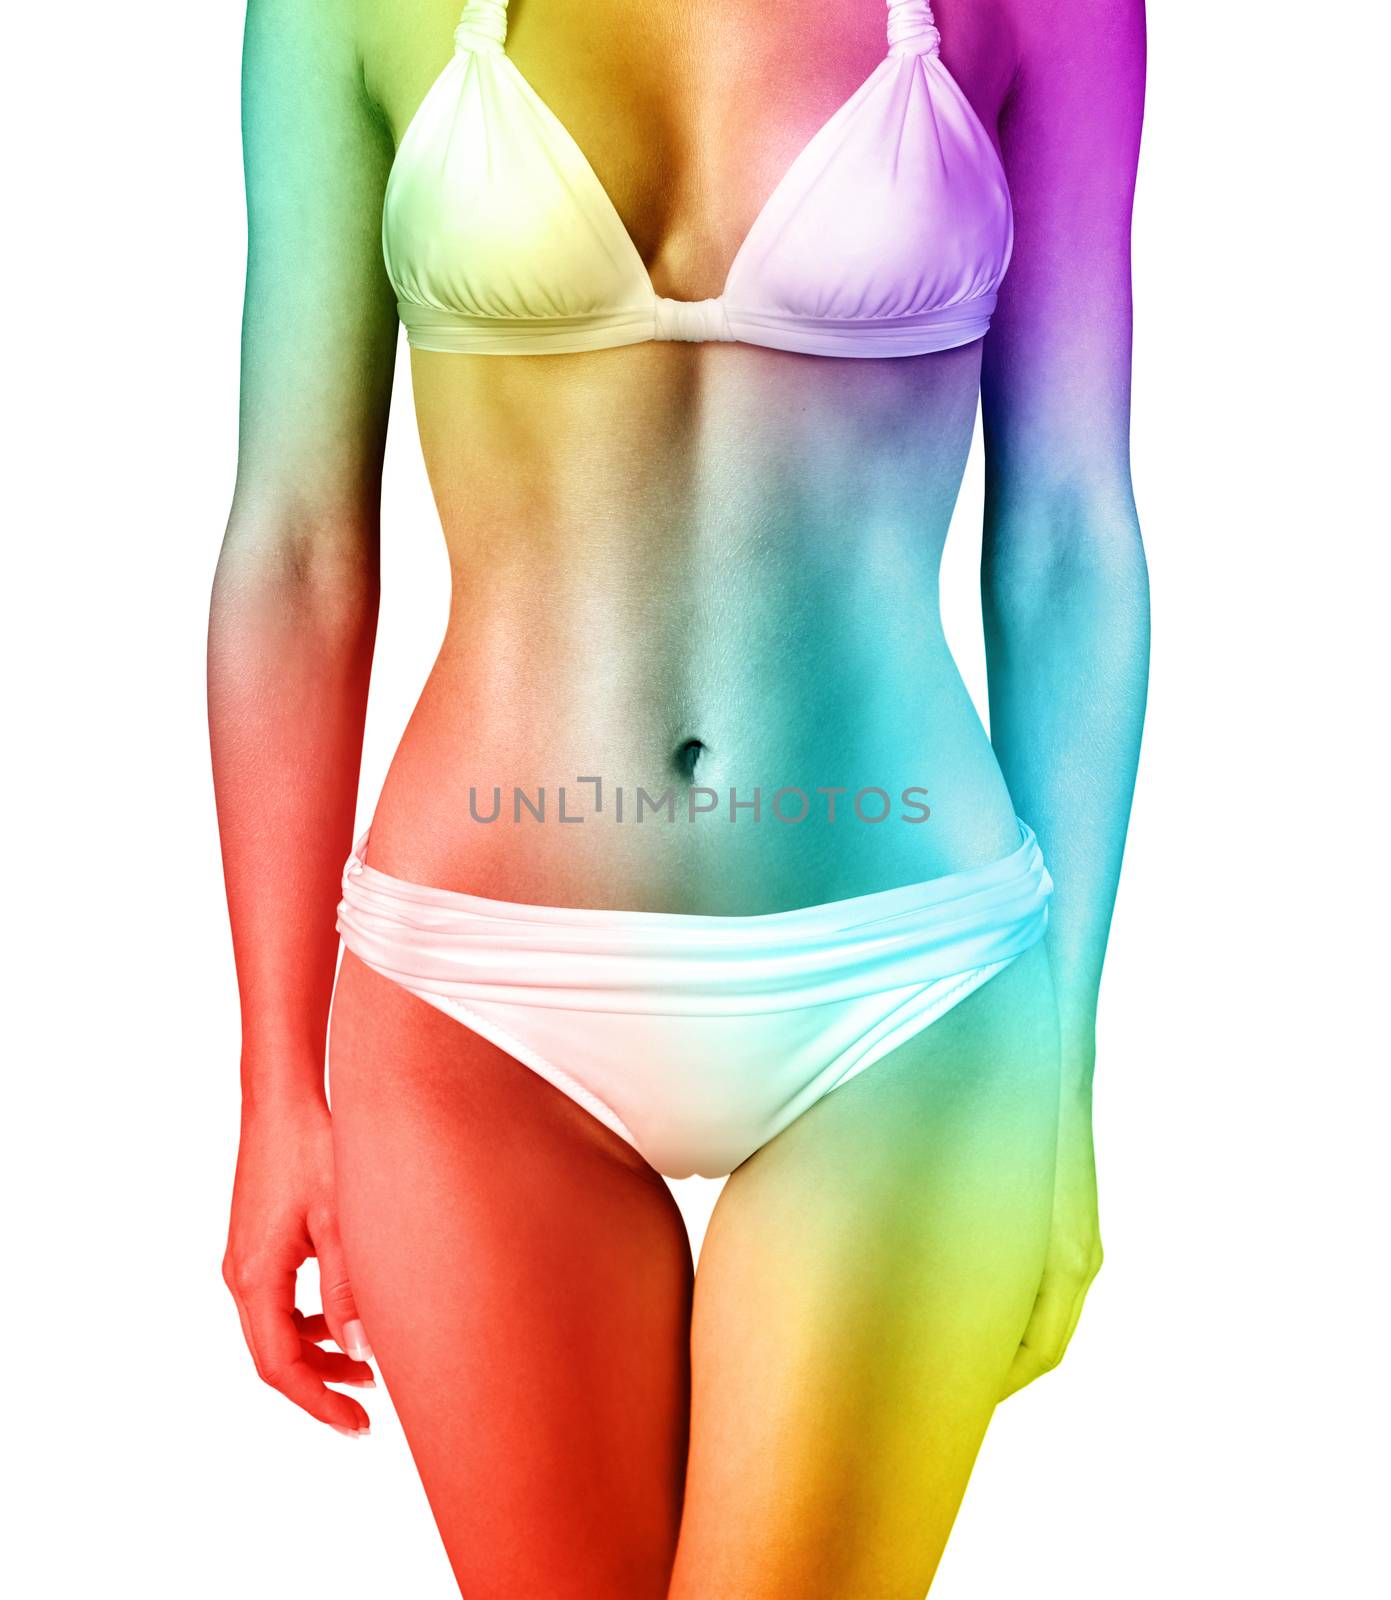 multi-colored body in underwear by ssuaphoto